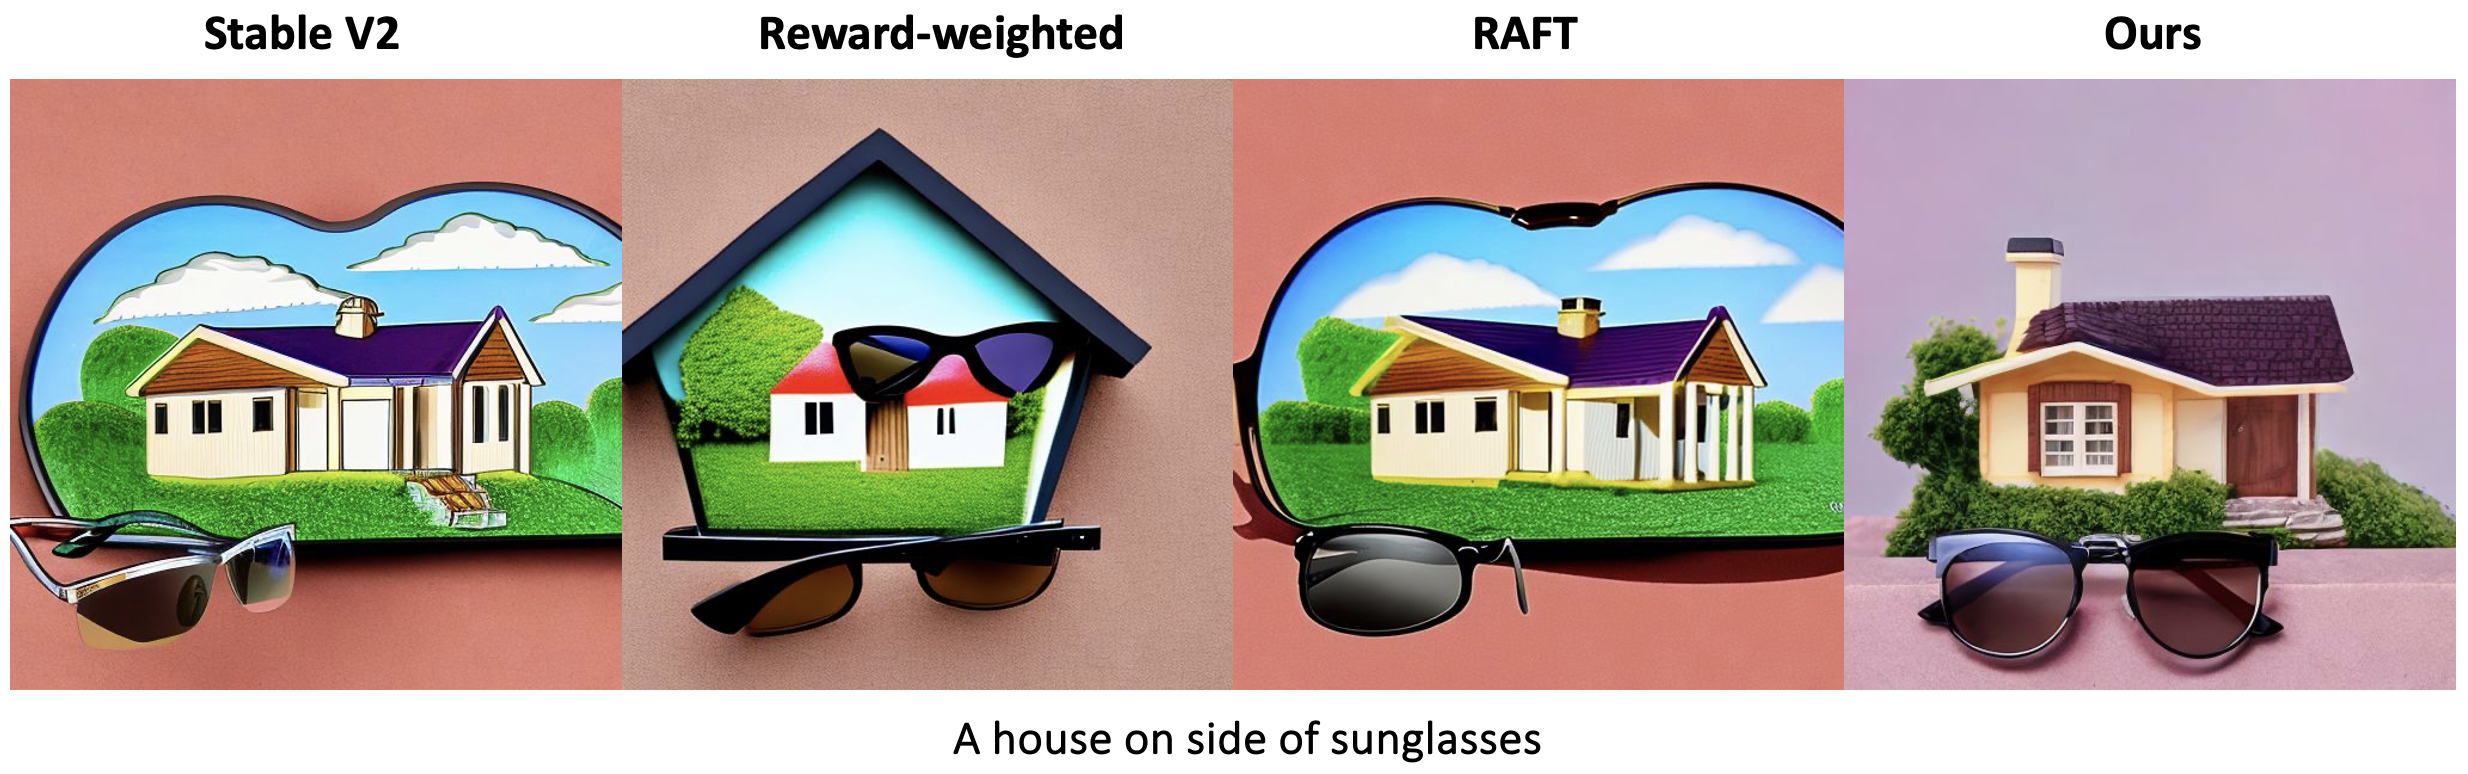 A house on side of sunglasses